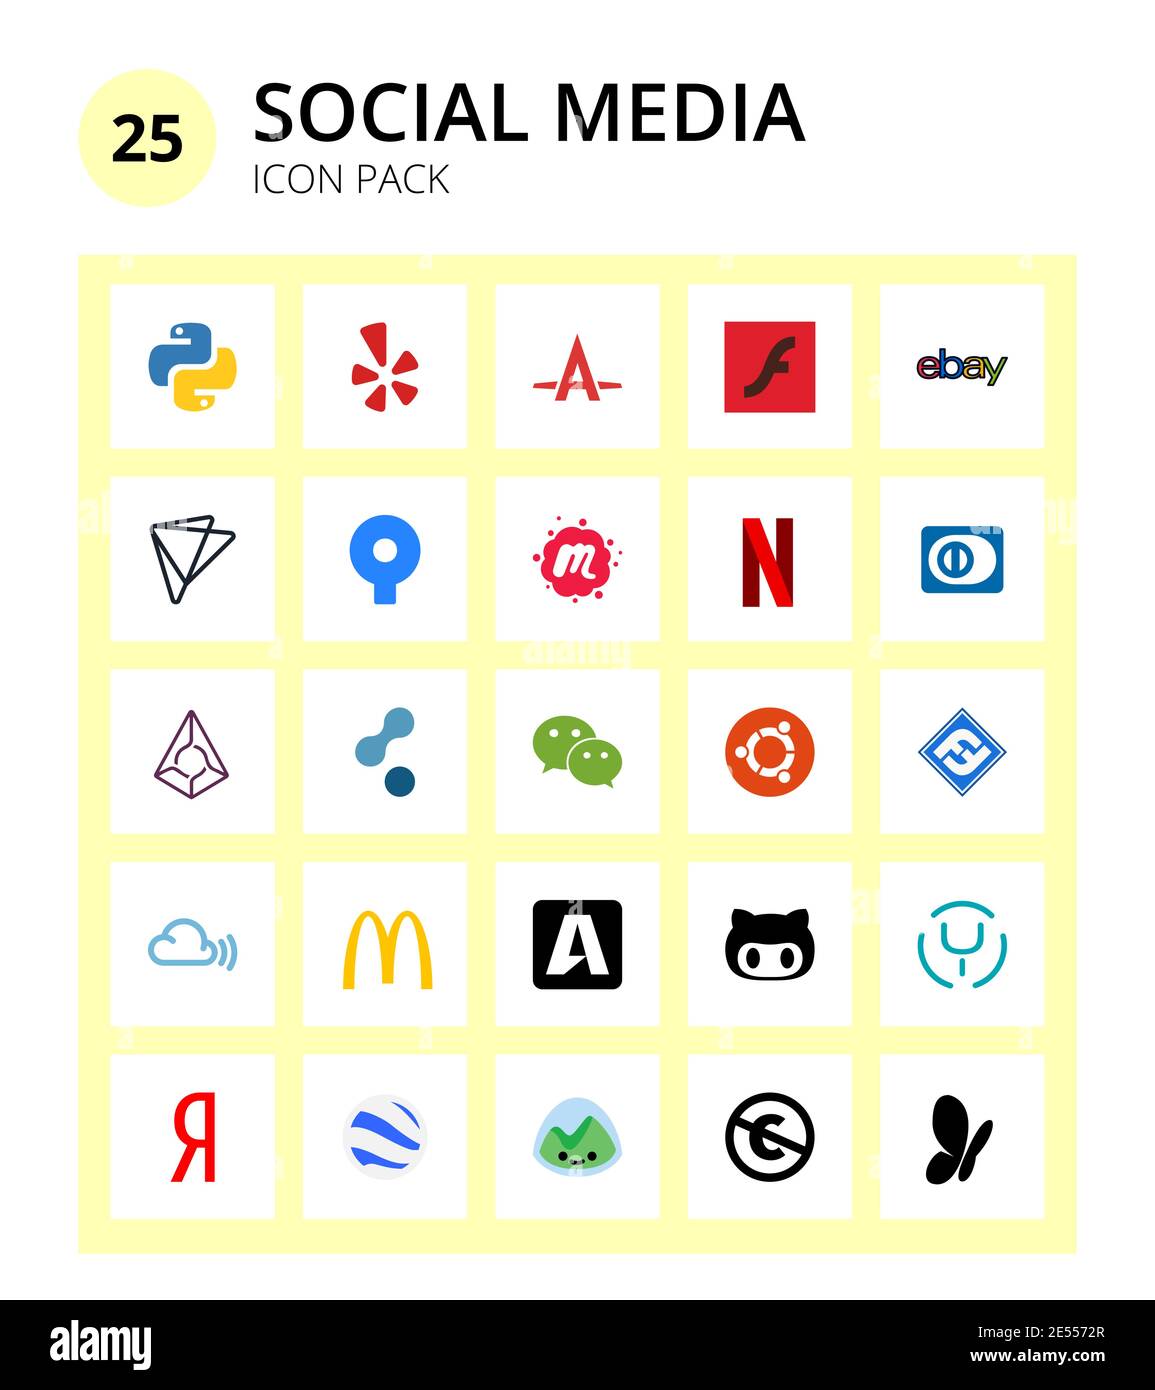 Pack de 25 social logo Fantasy, weixin, meetup, Cloudsmith, carte de crédit modifiable Vector Design Elements Illustration de Vecteur